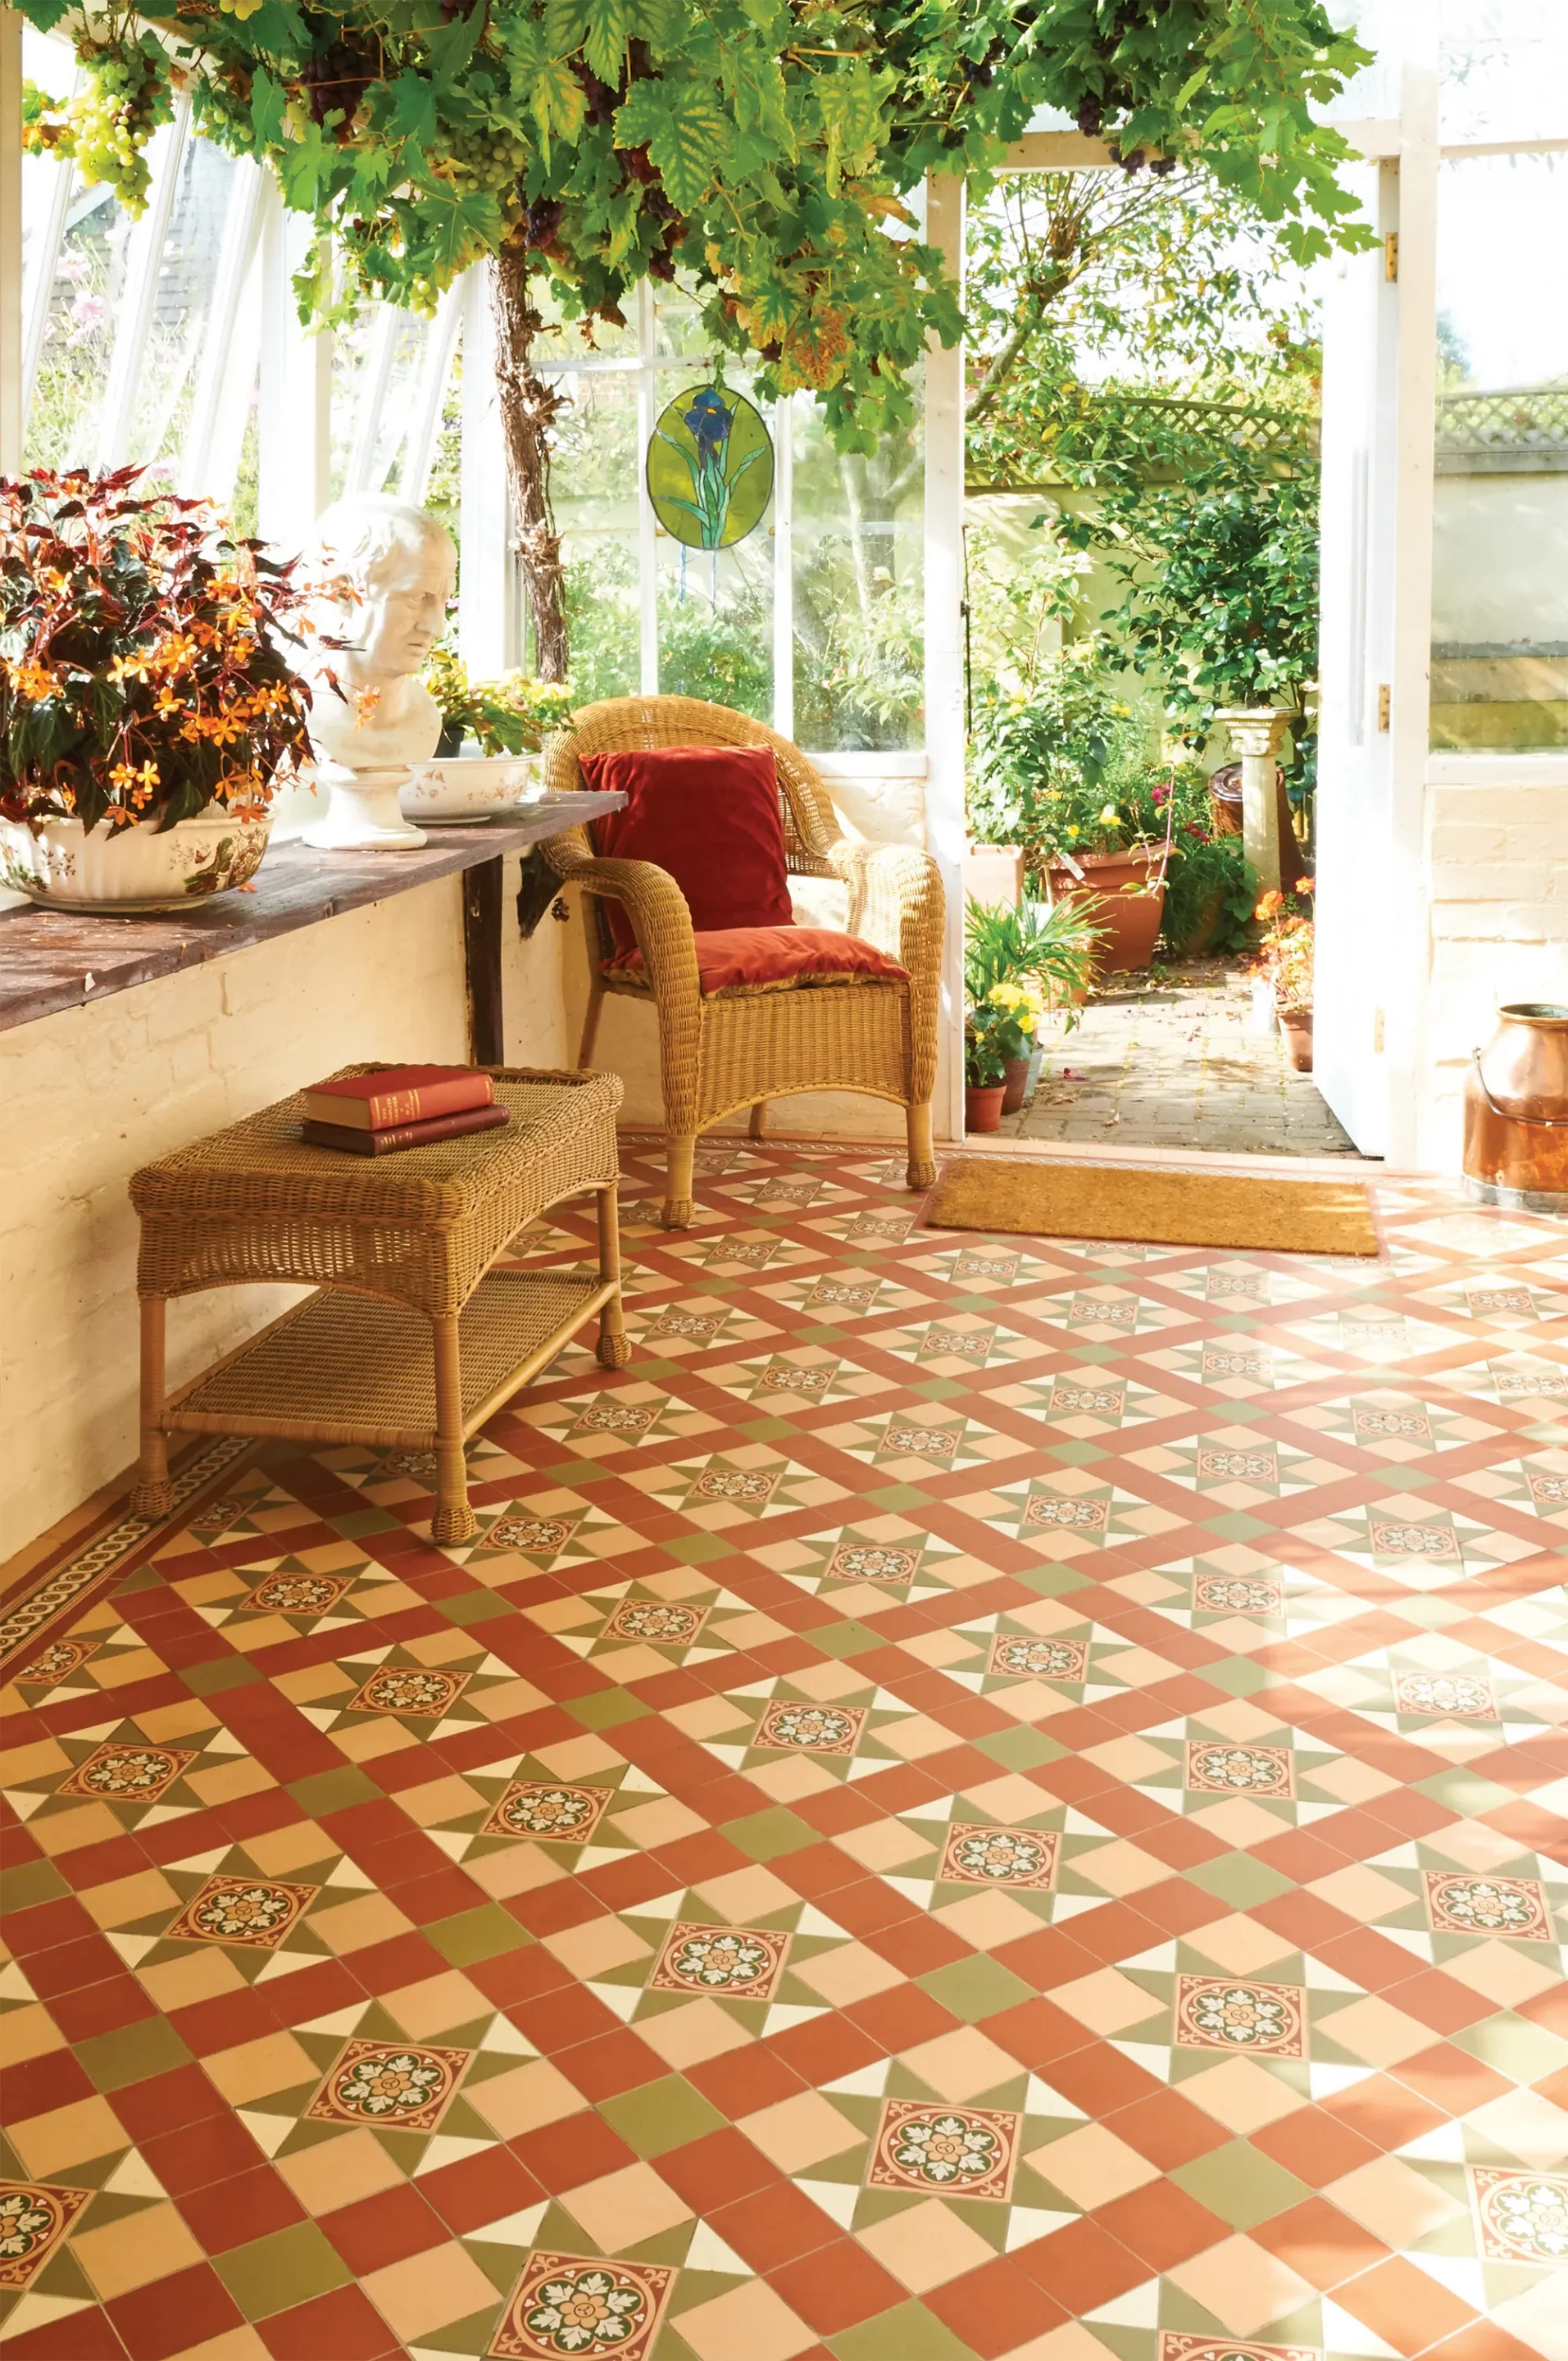 Colourful tiled flooring